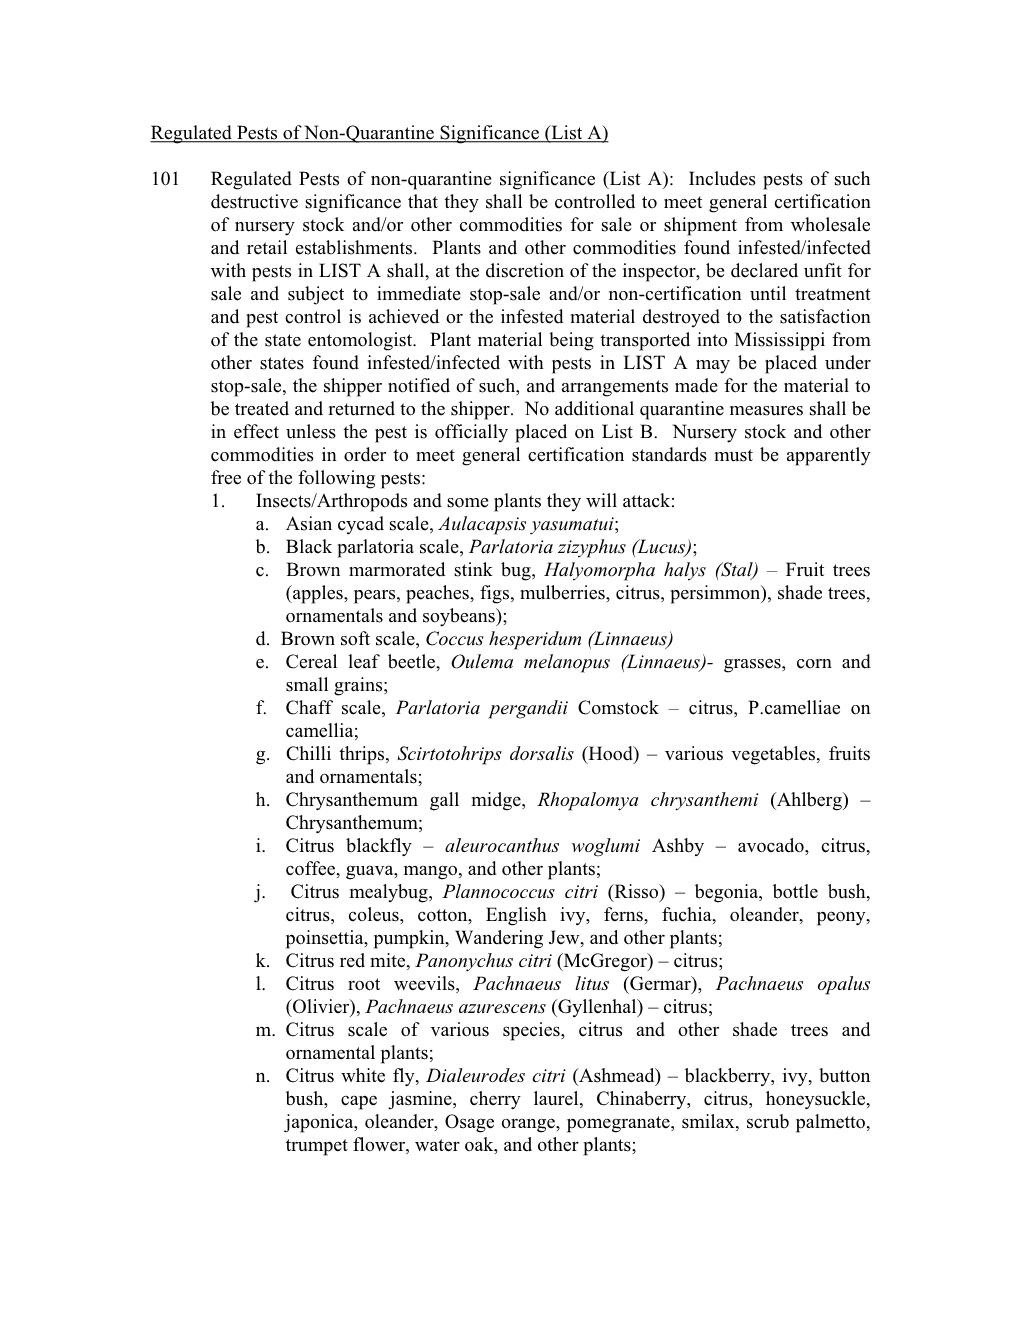 Regulated Pests of Quarantine Significance (List B)